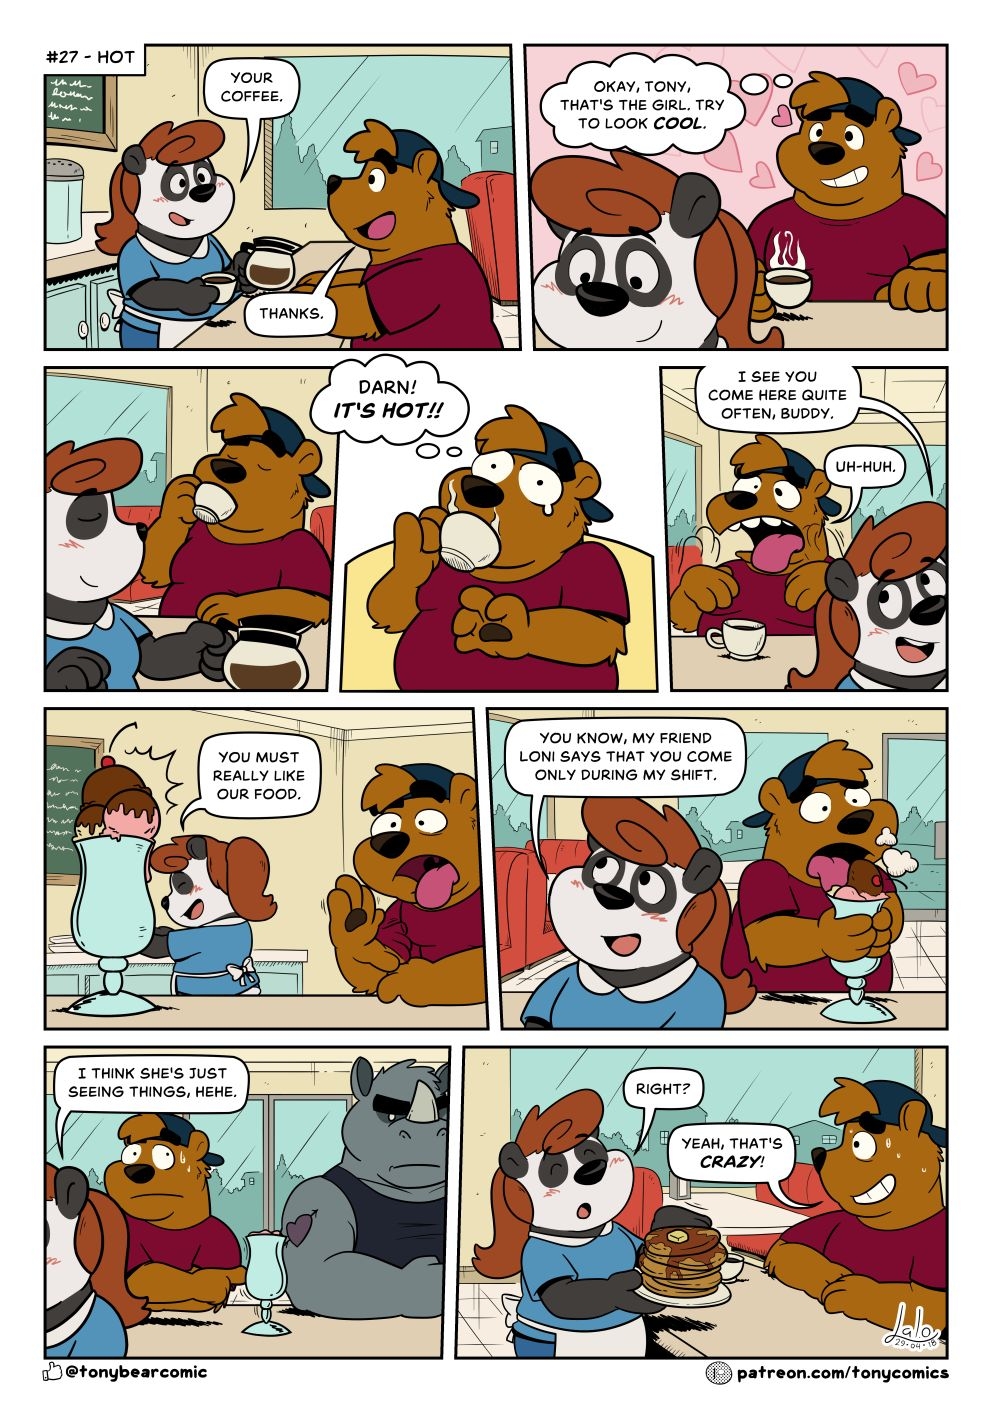 [FurryDude88] Tony Comics [On Going] 124